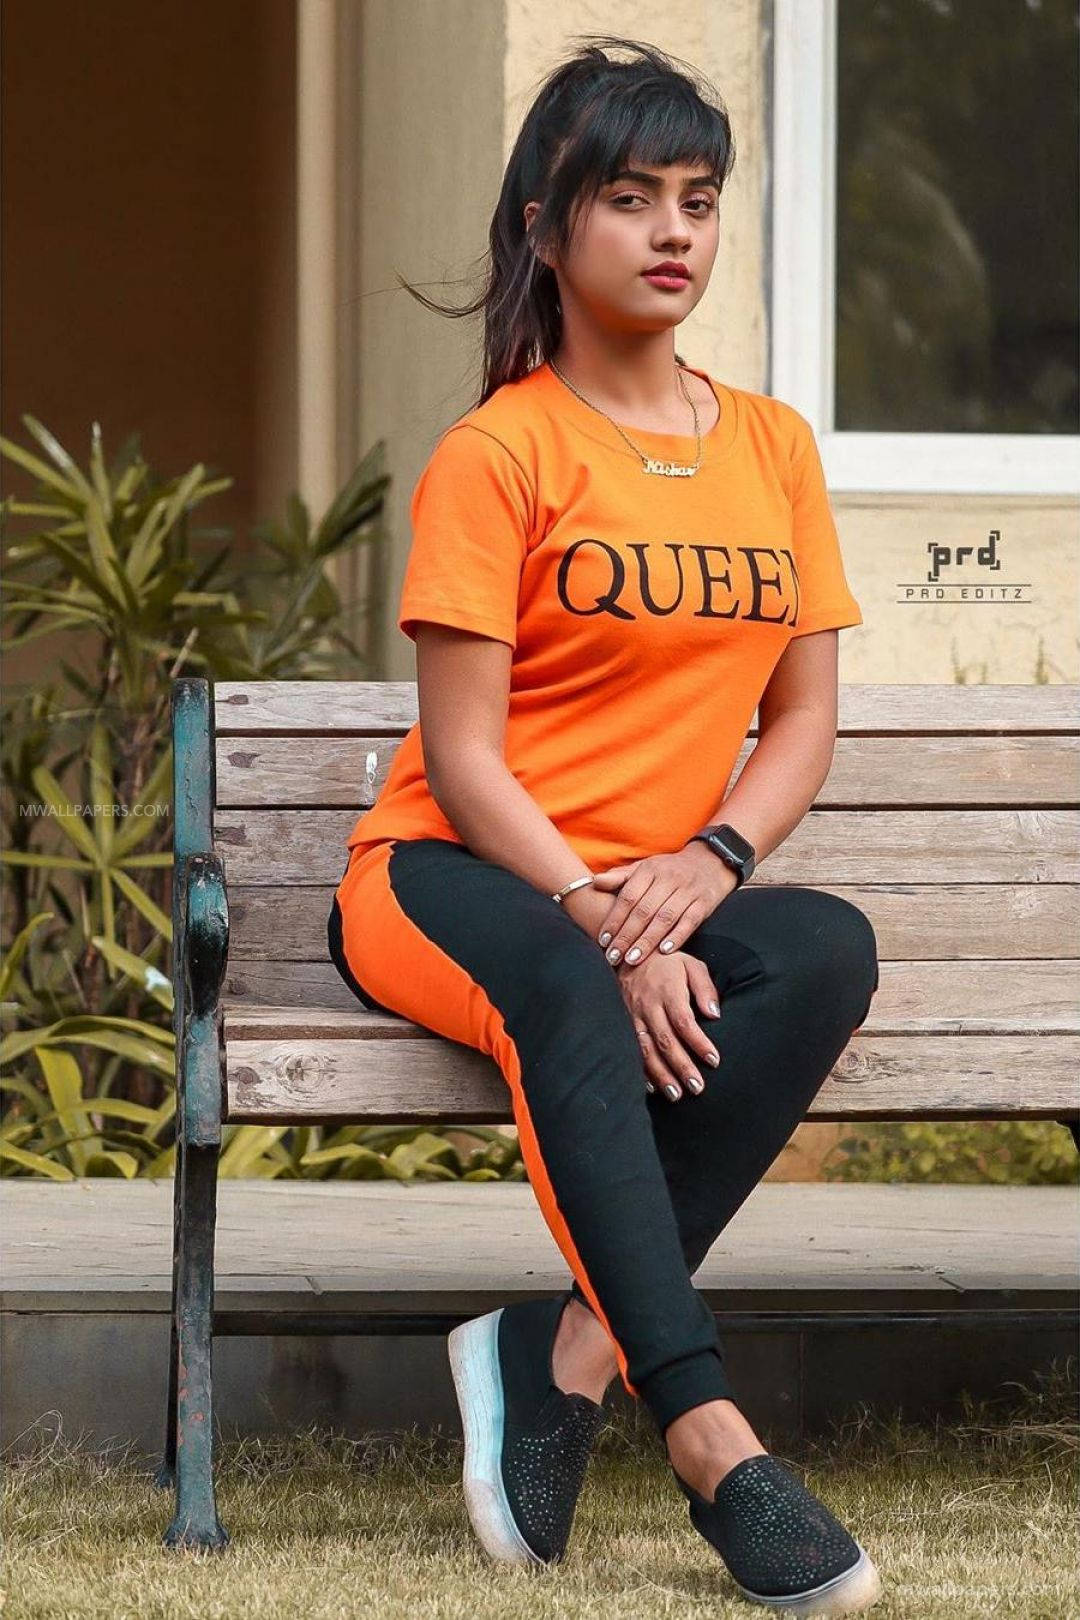 Nisha Guragain In Orange Queen Top Background